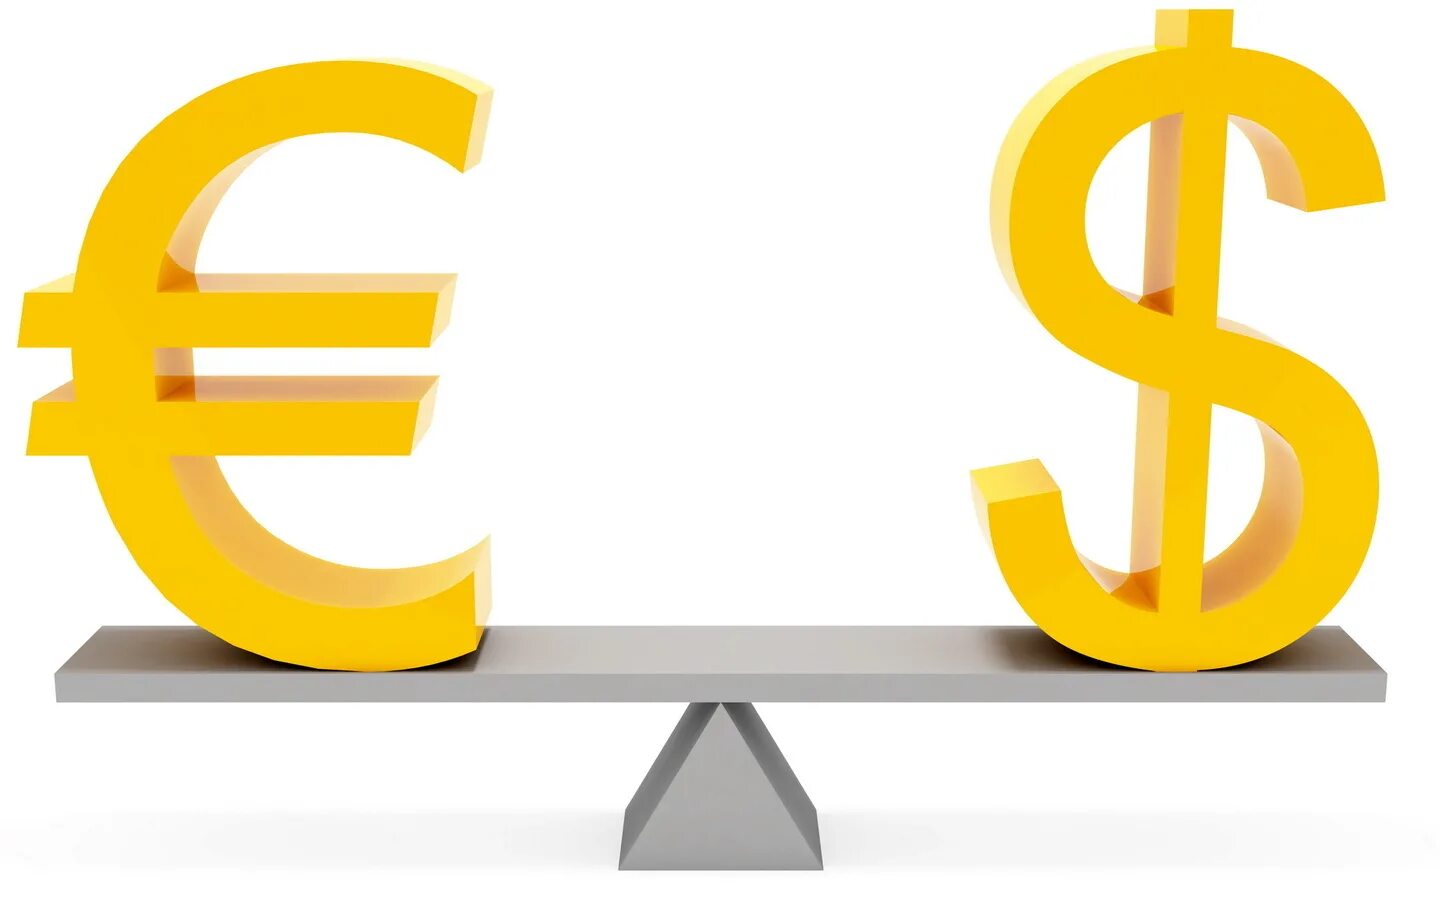 Доллар и евро цена. Значок евро и доллара. Изображение валют. Валюта картинки. Доллар и евро рисунок.